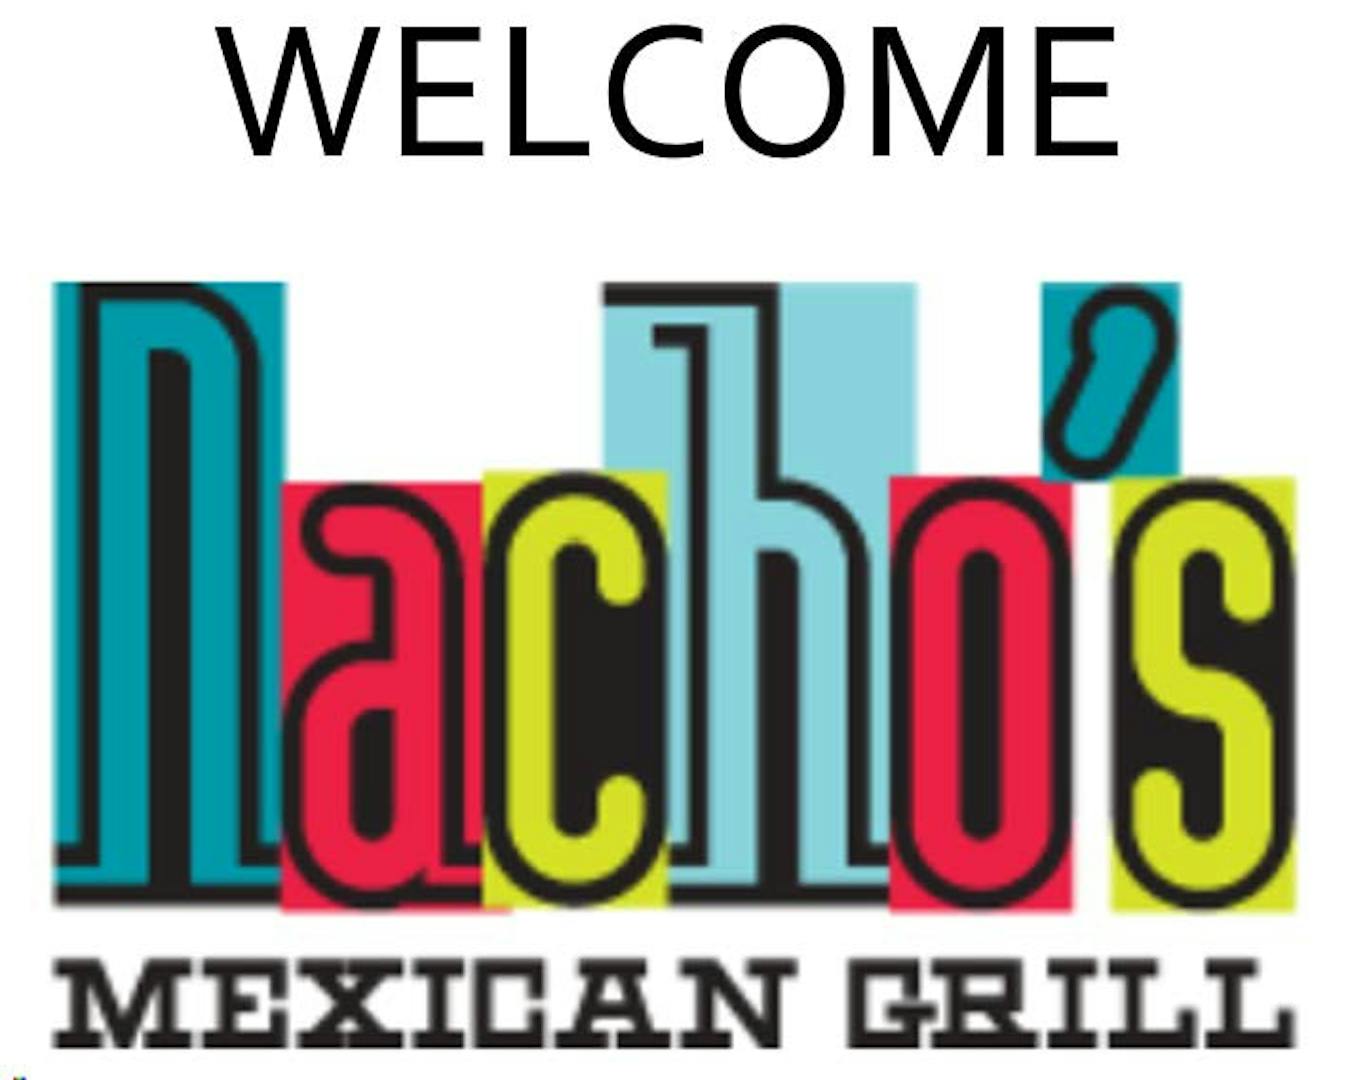 Nacho's Mexican Grill